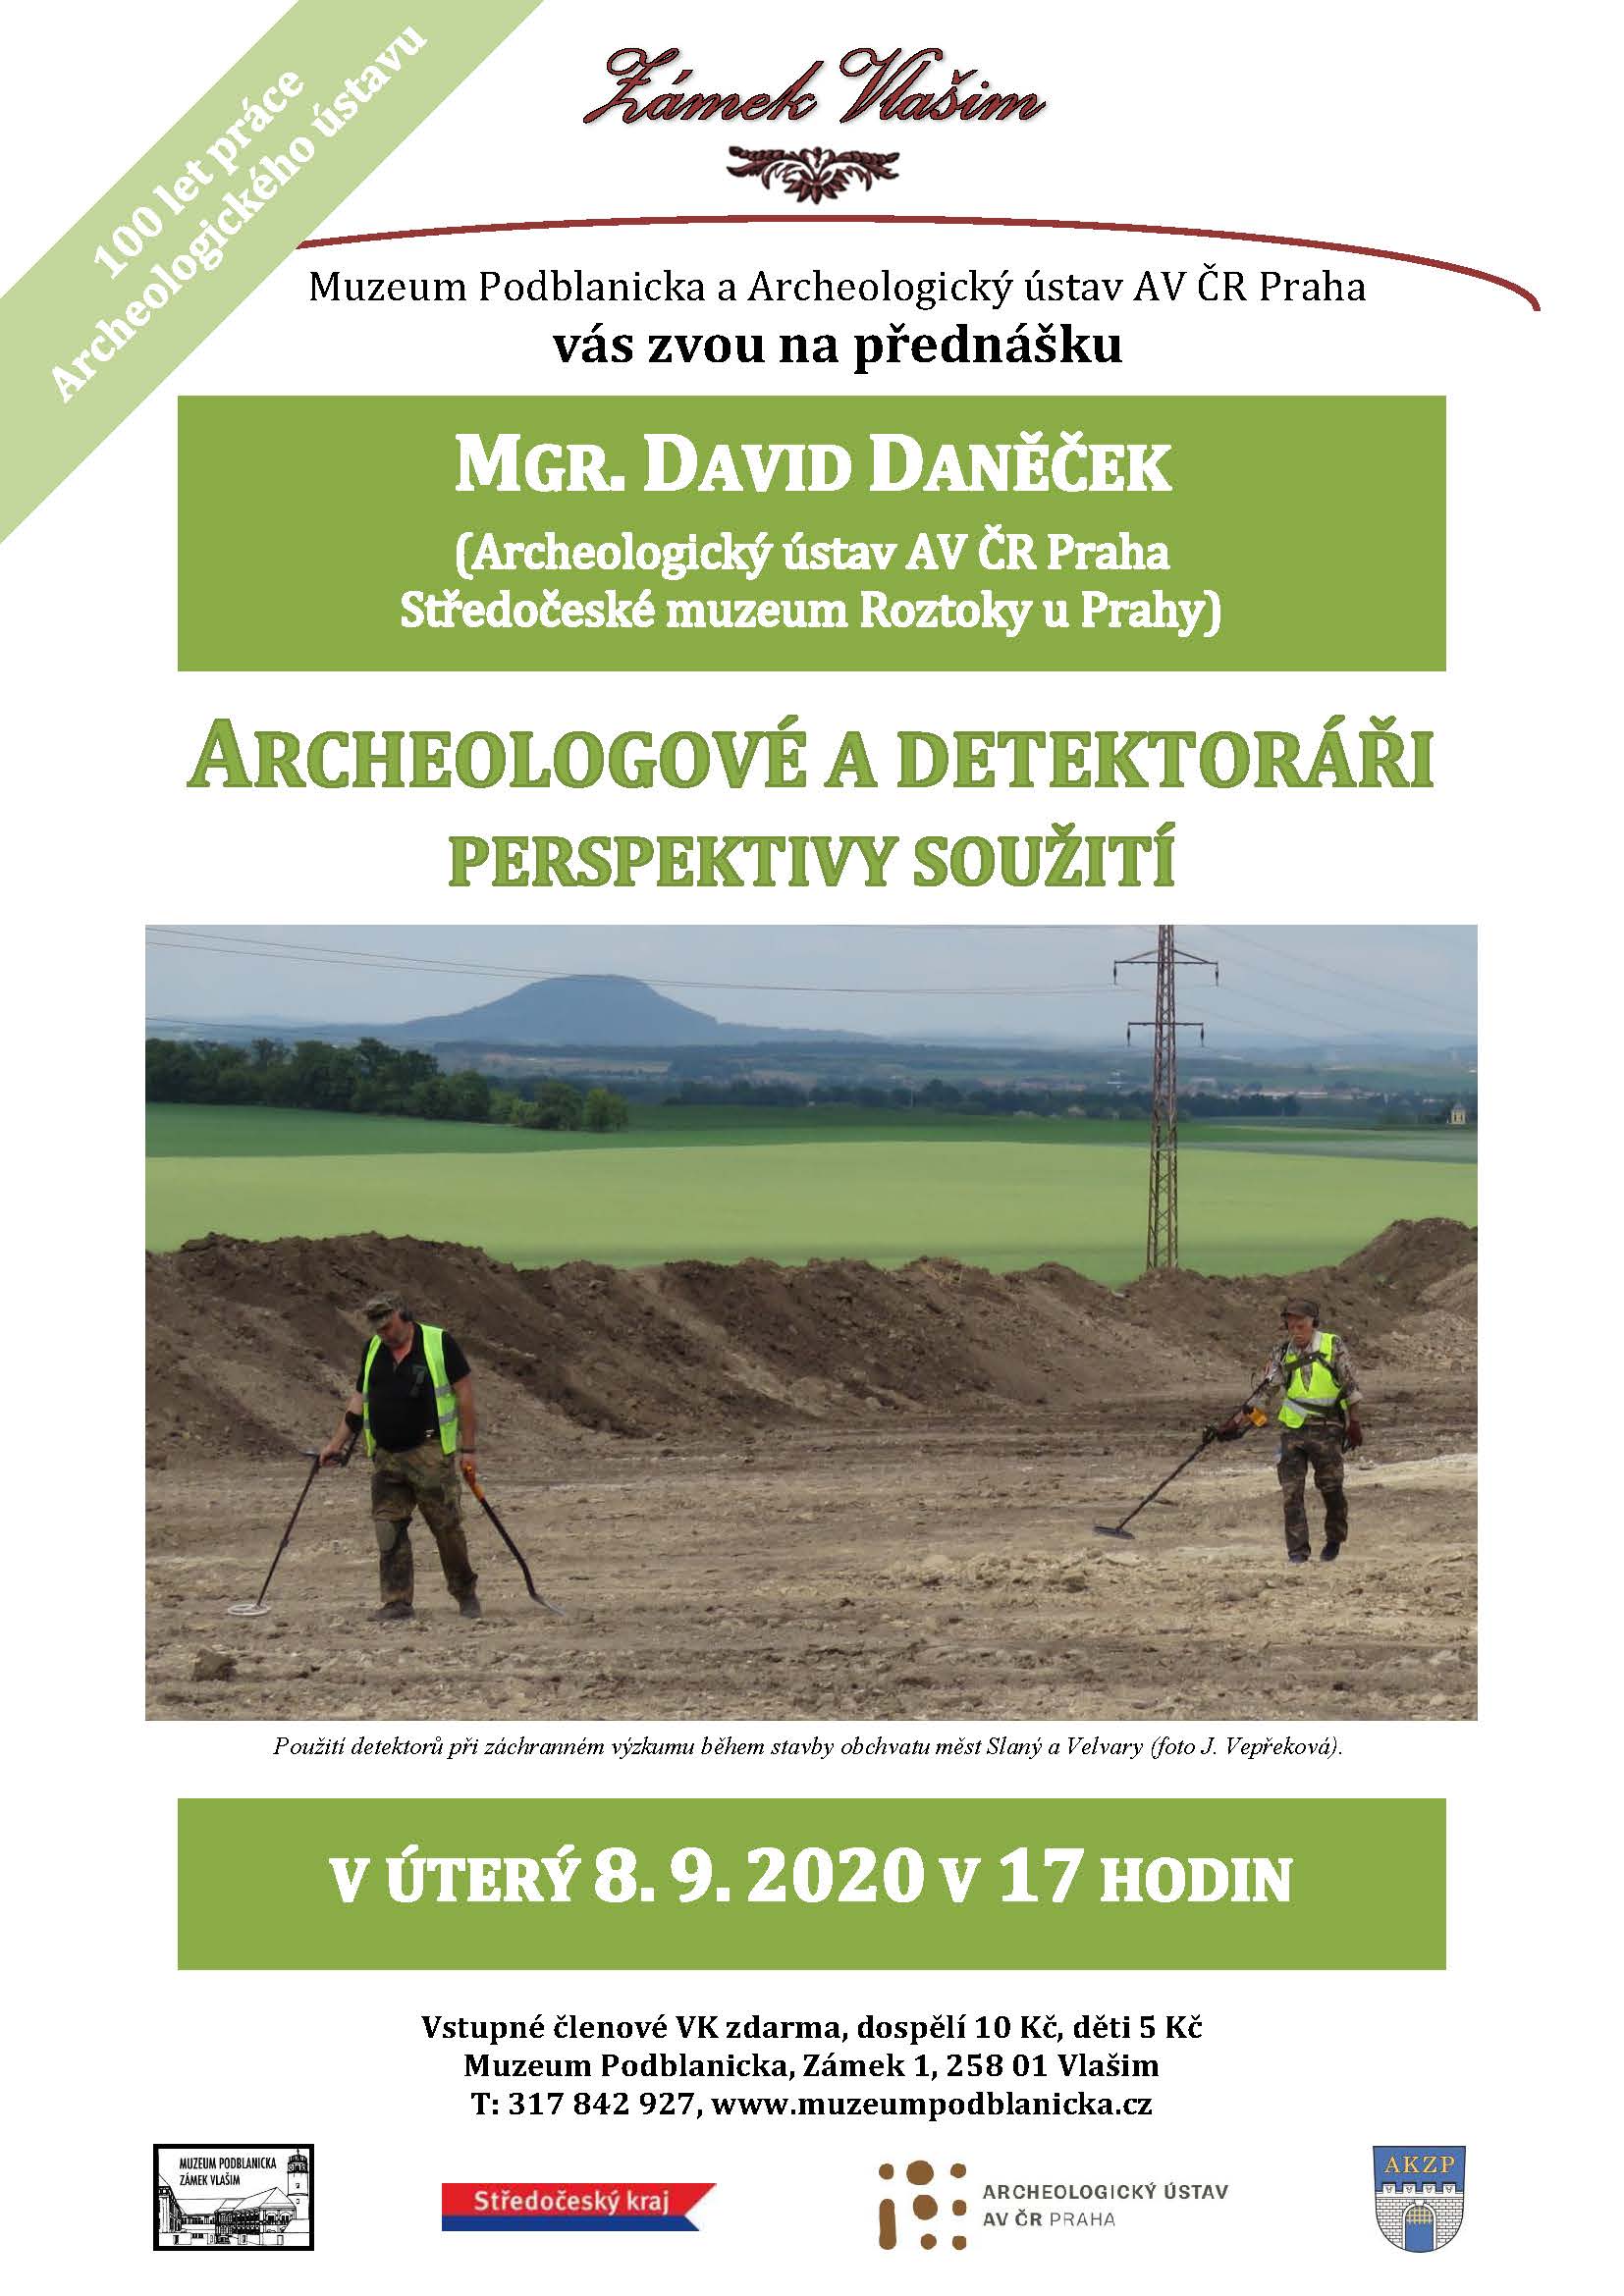 Archeologové a detektoráři perspektivy soužití